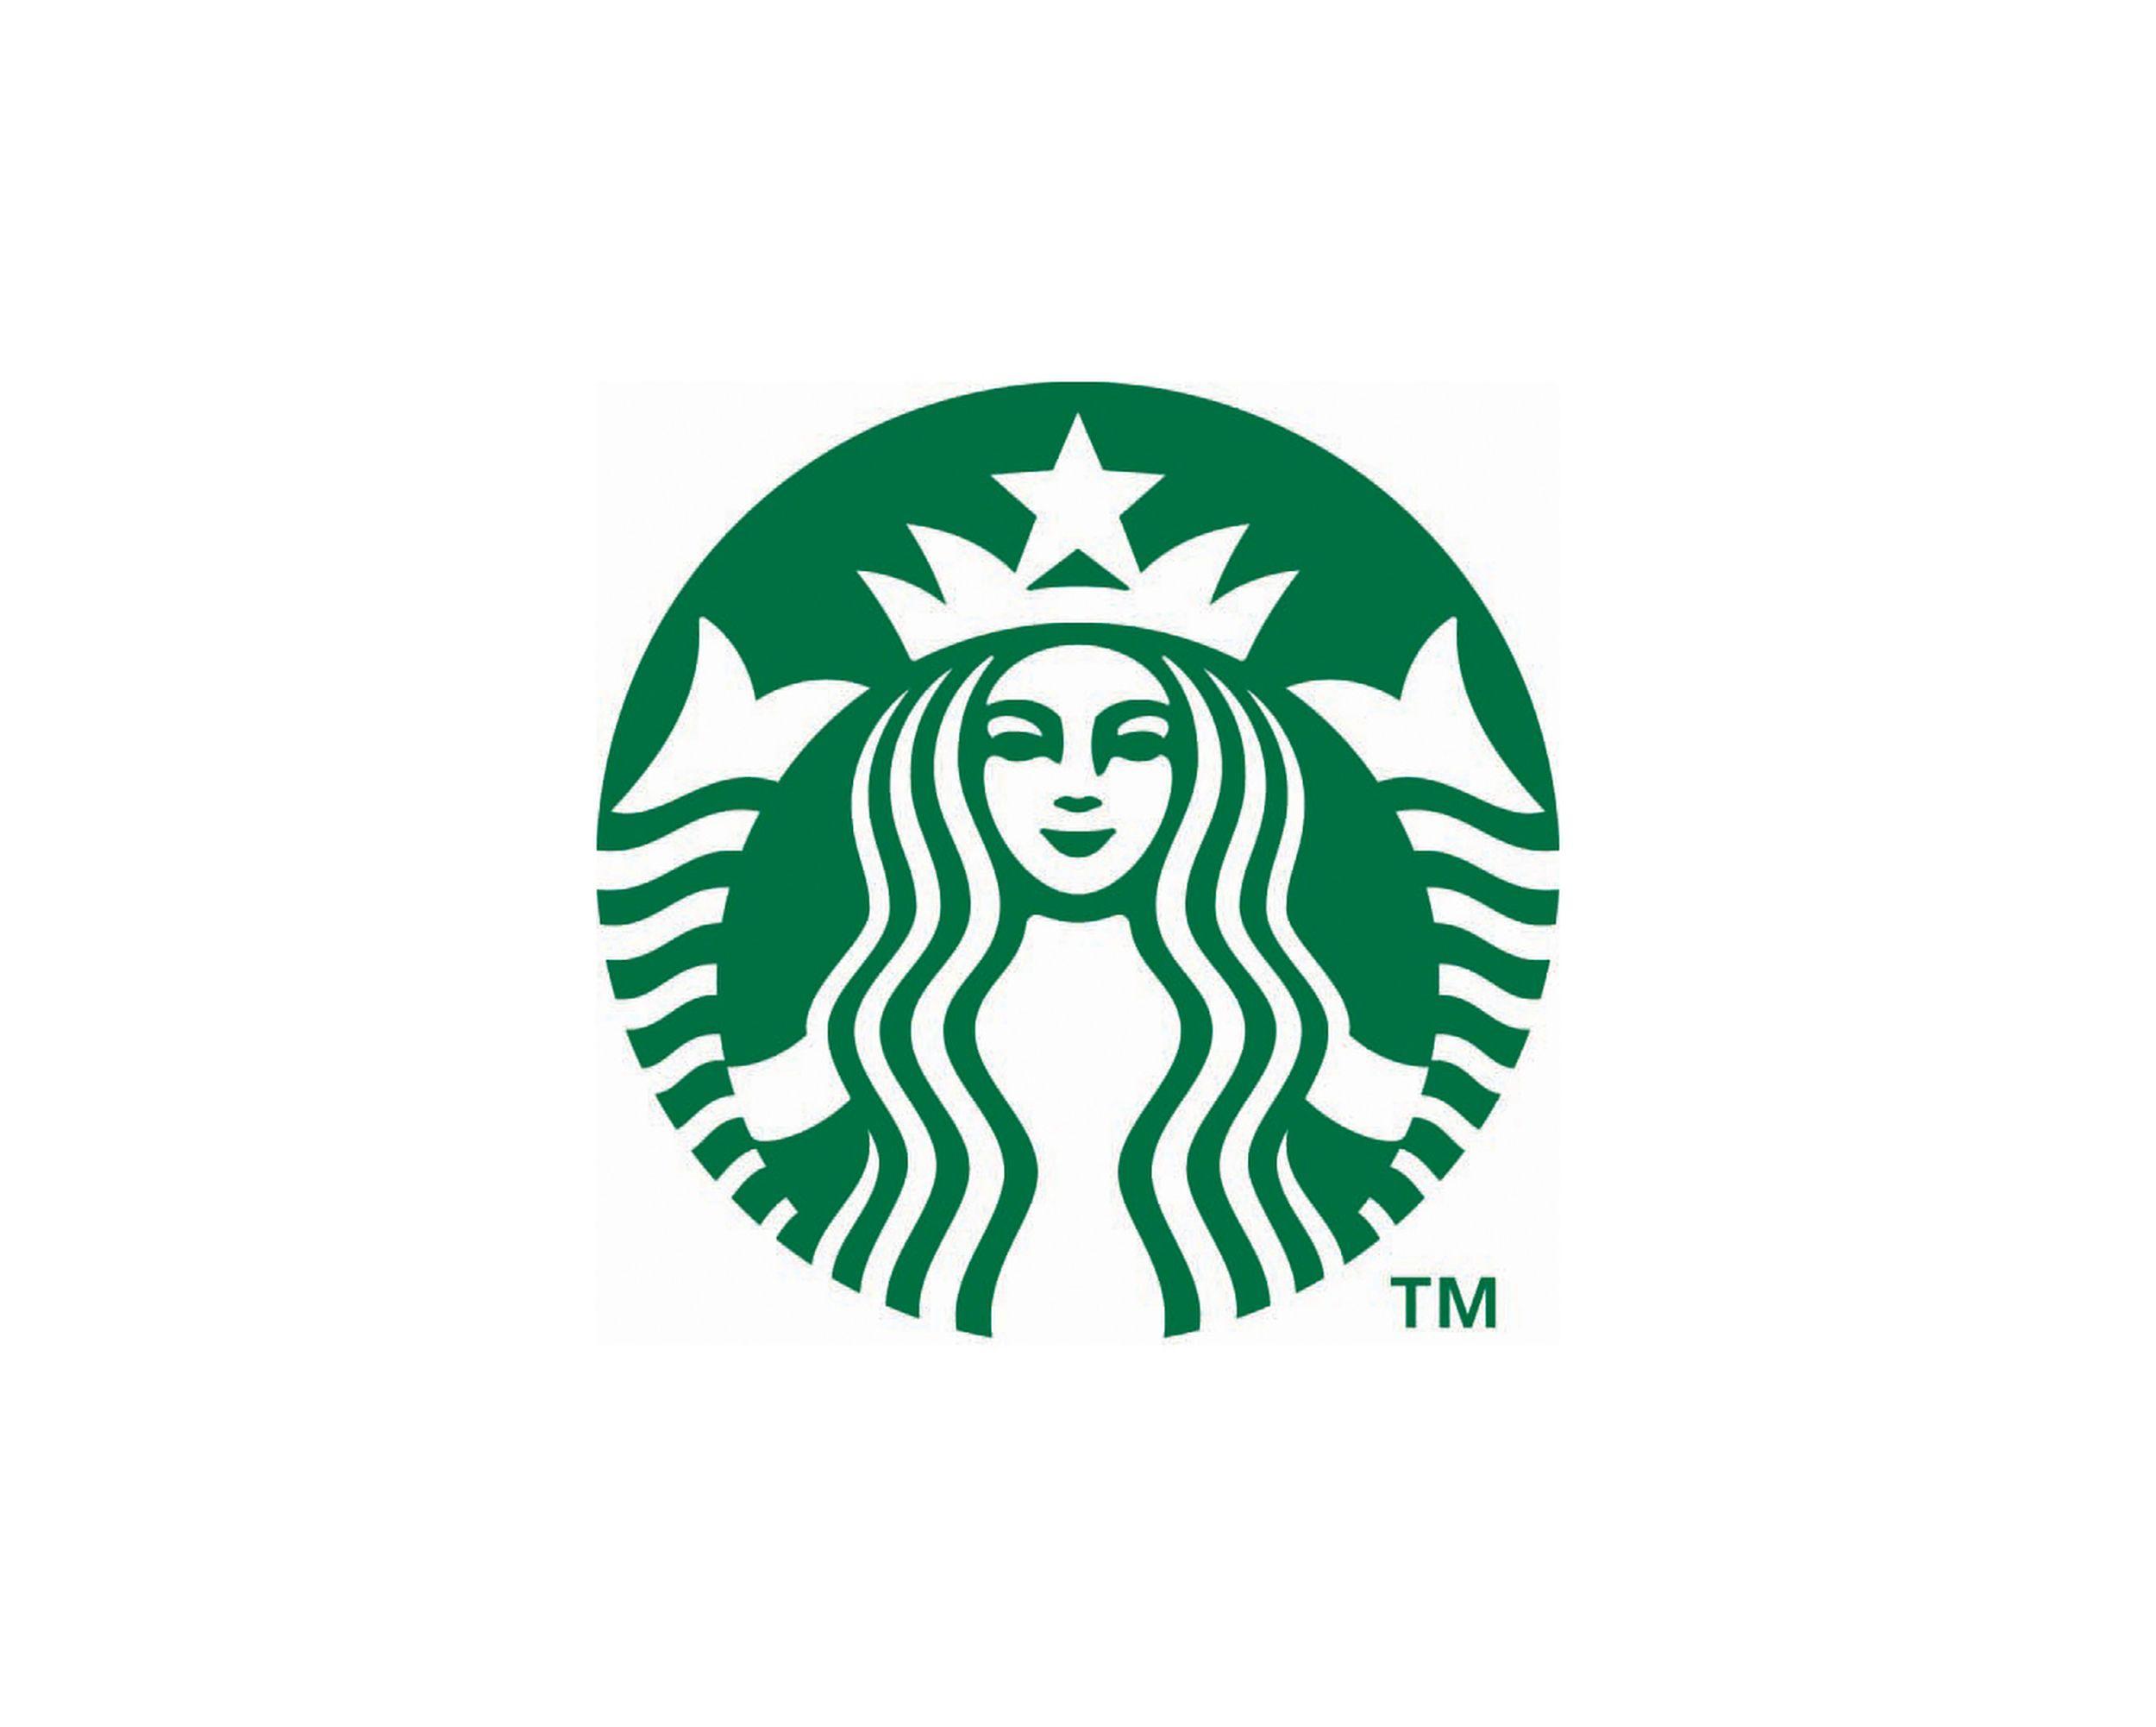 Official Starbucks Logo - Starbucks Stories - Stories to inspire and nurture the human spirit